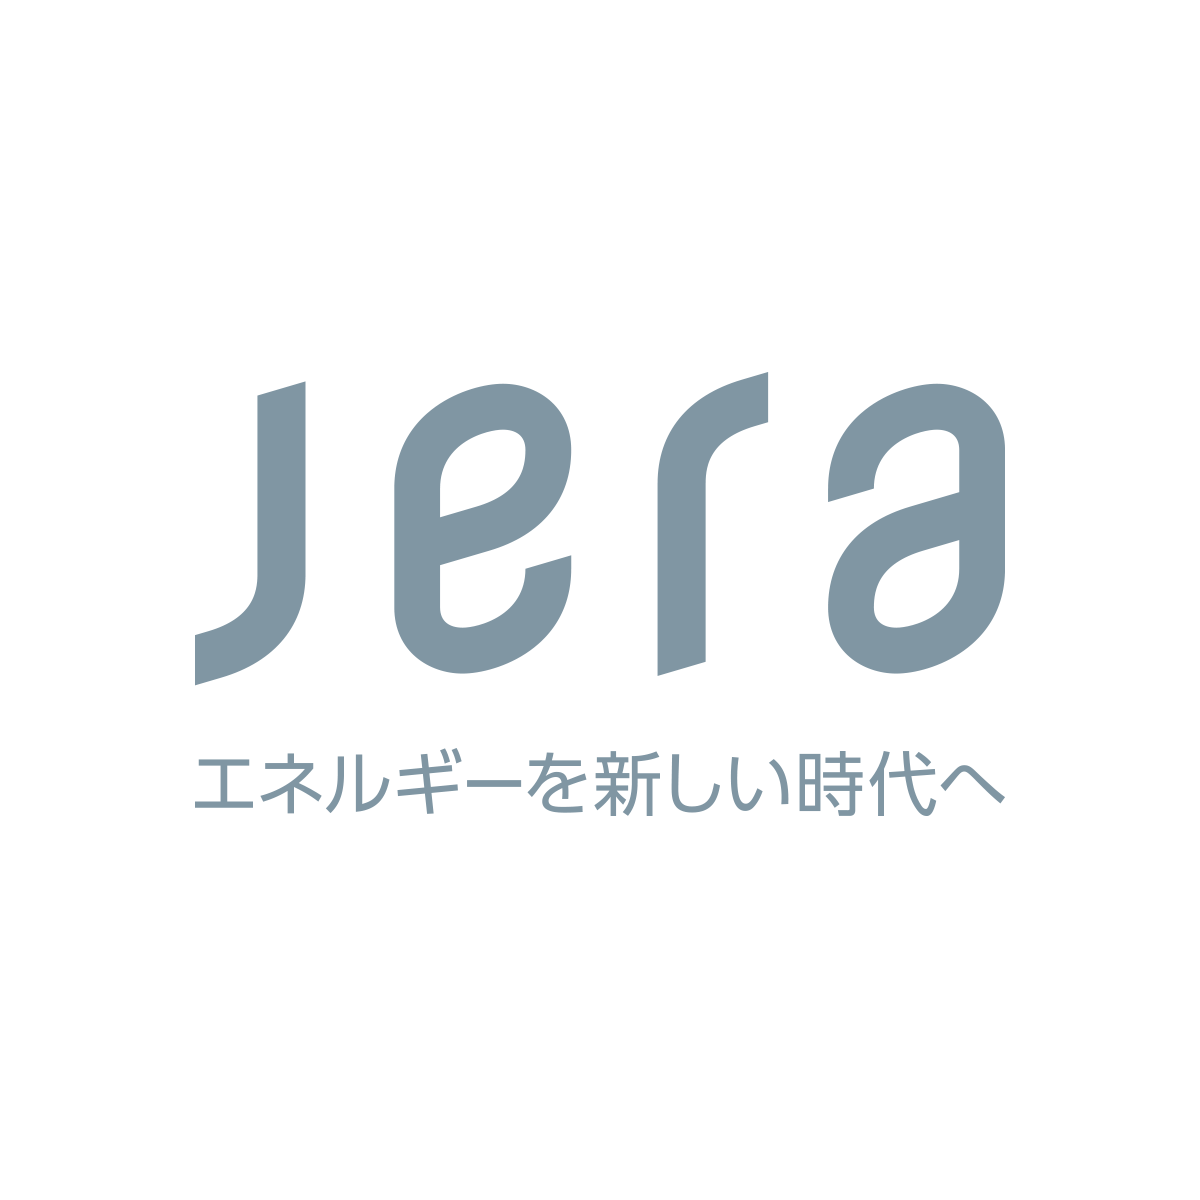 JERAホームページ